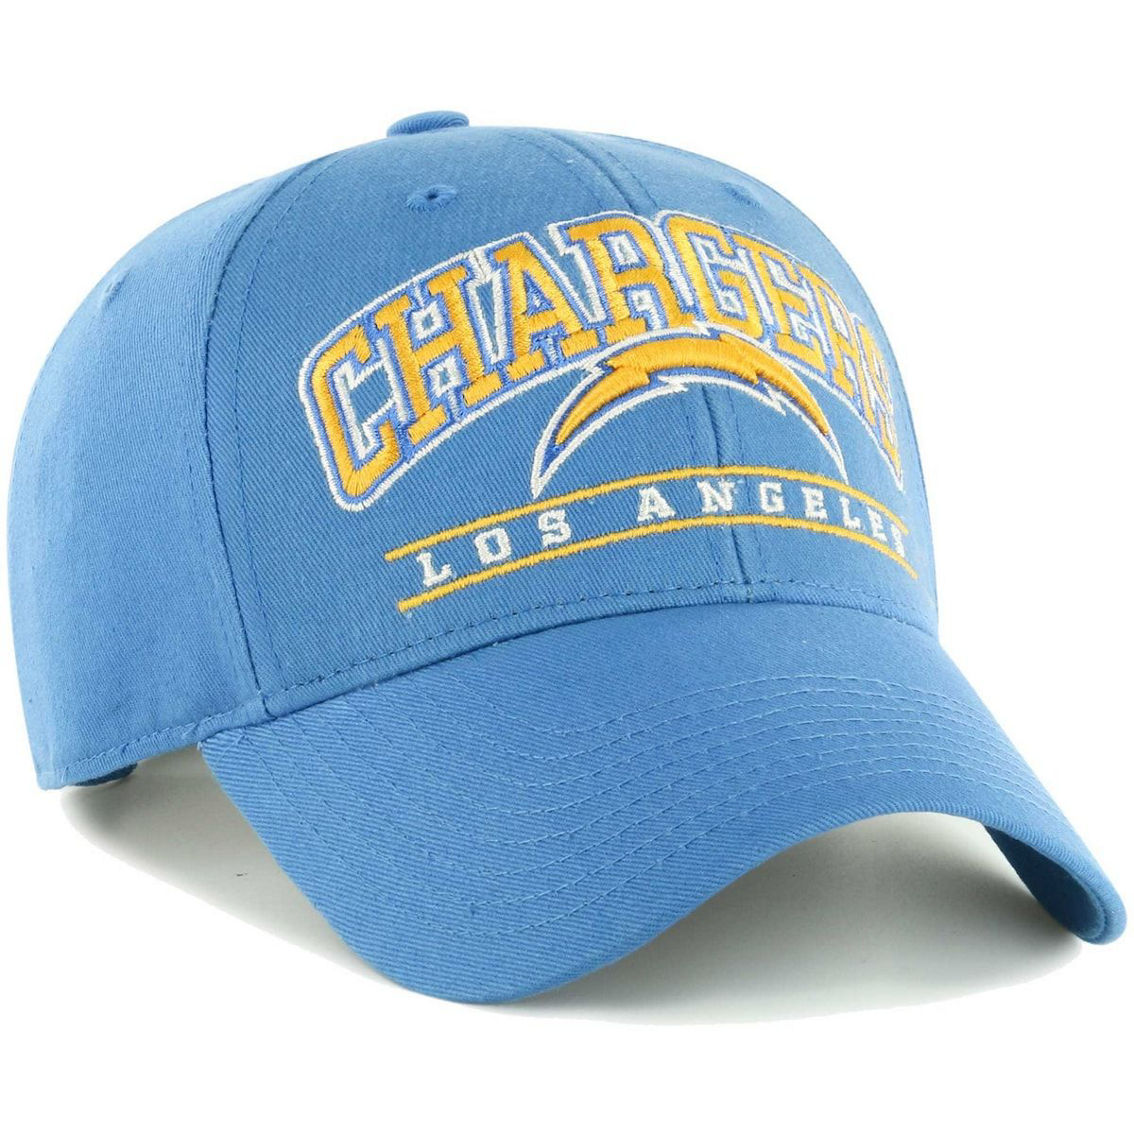 '47 Men's Powder Blue Los Angeles Chargers Fletcher MVP Adjustable Hat - Image 3 of 4